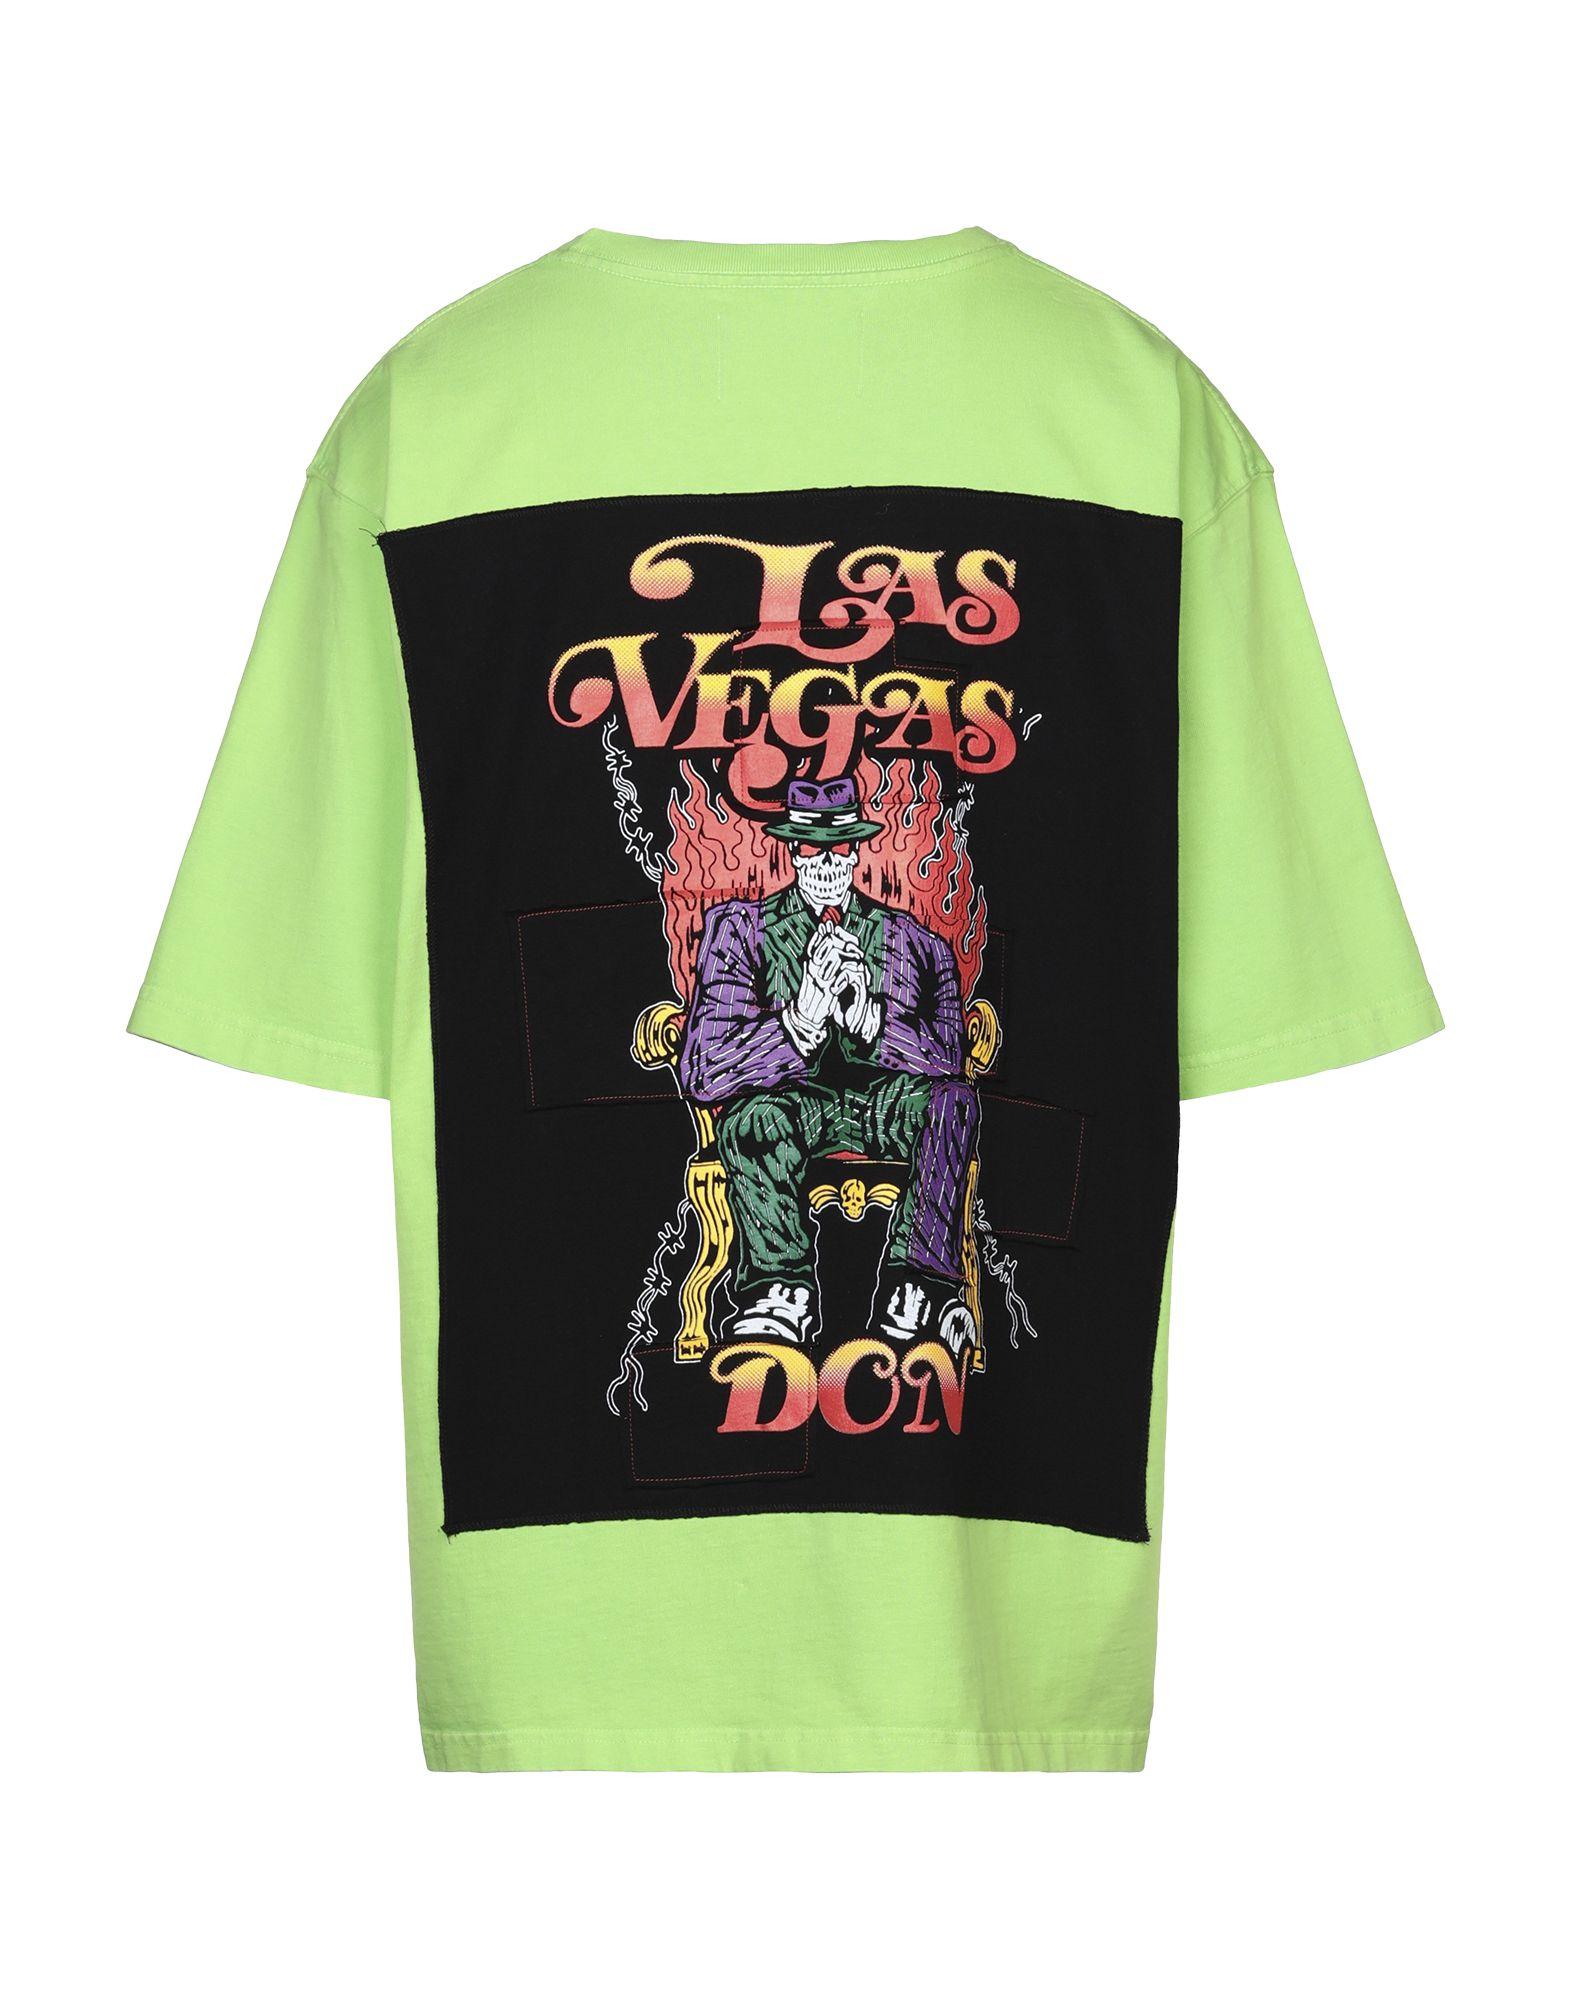 Warren Lotas T-shirt in Acid Green (Green) for Men - Lyst